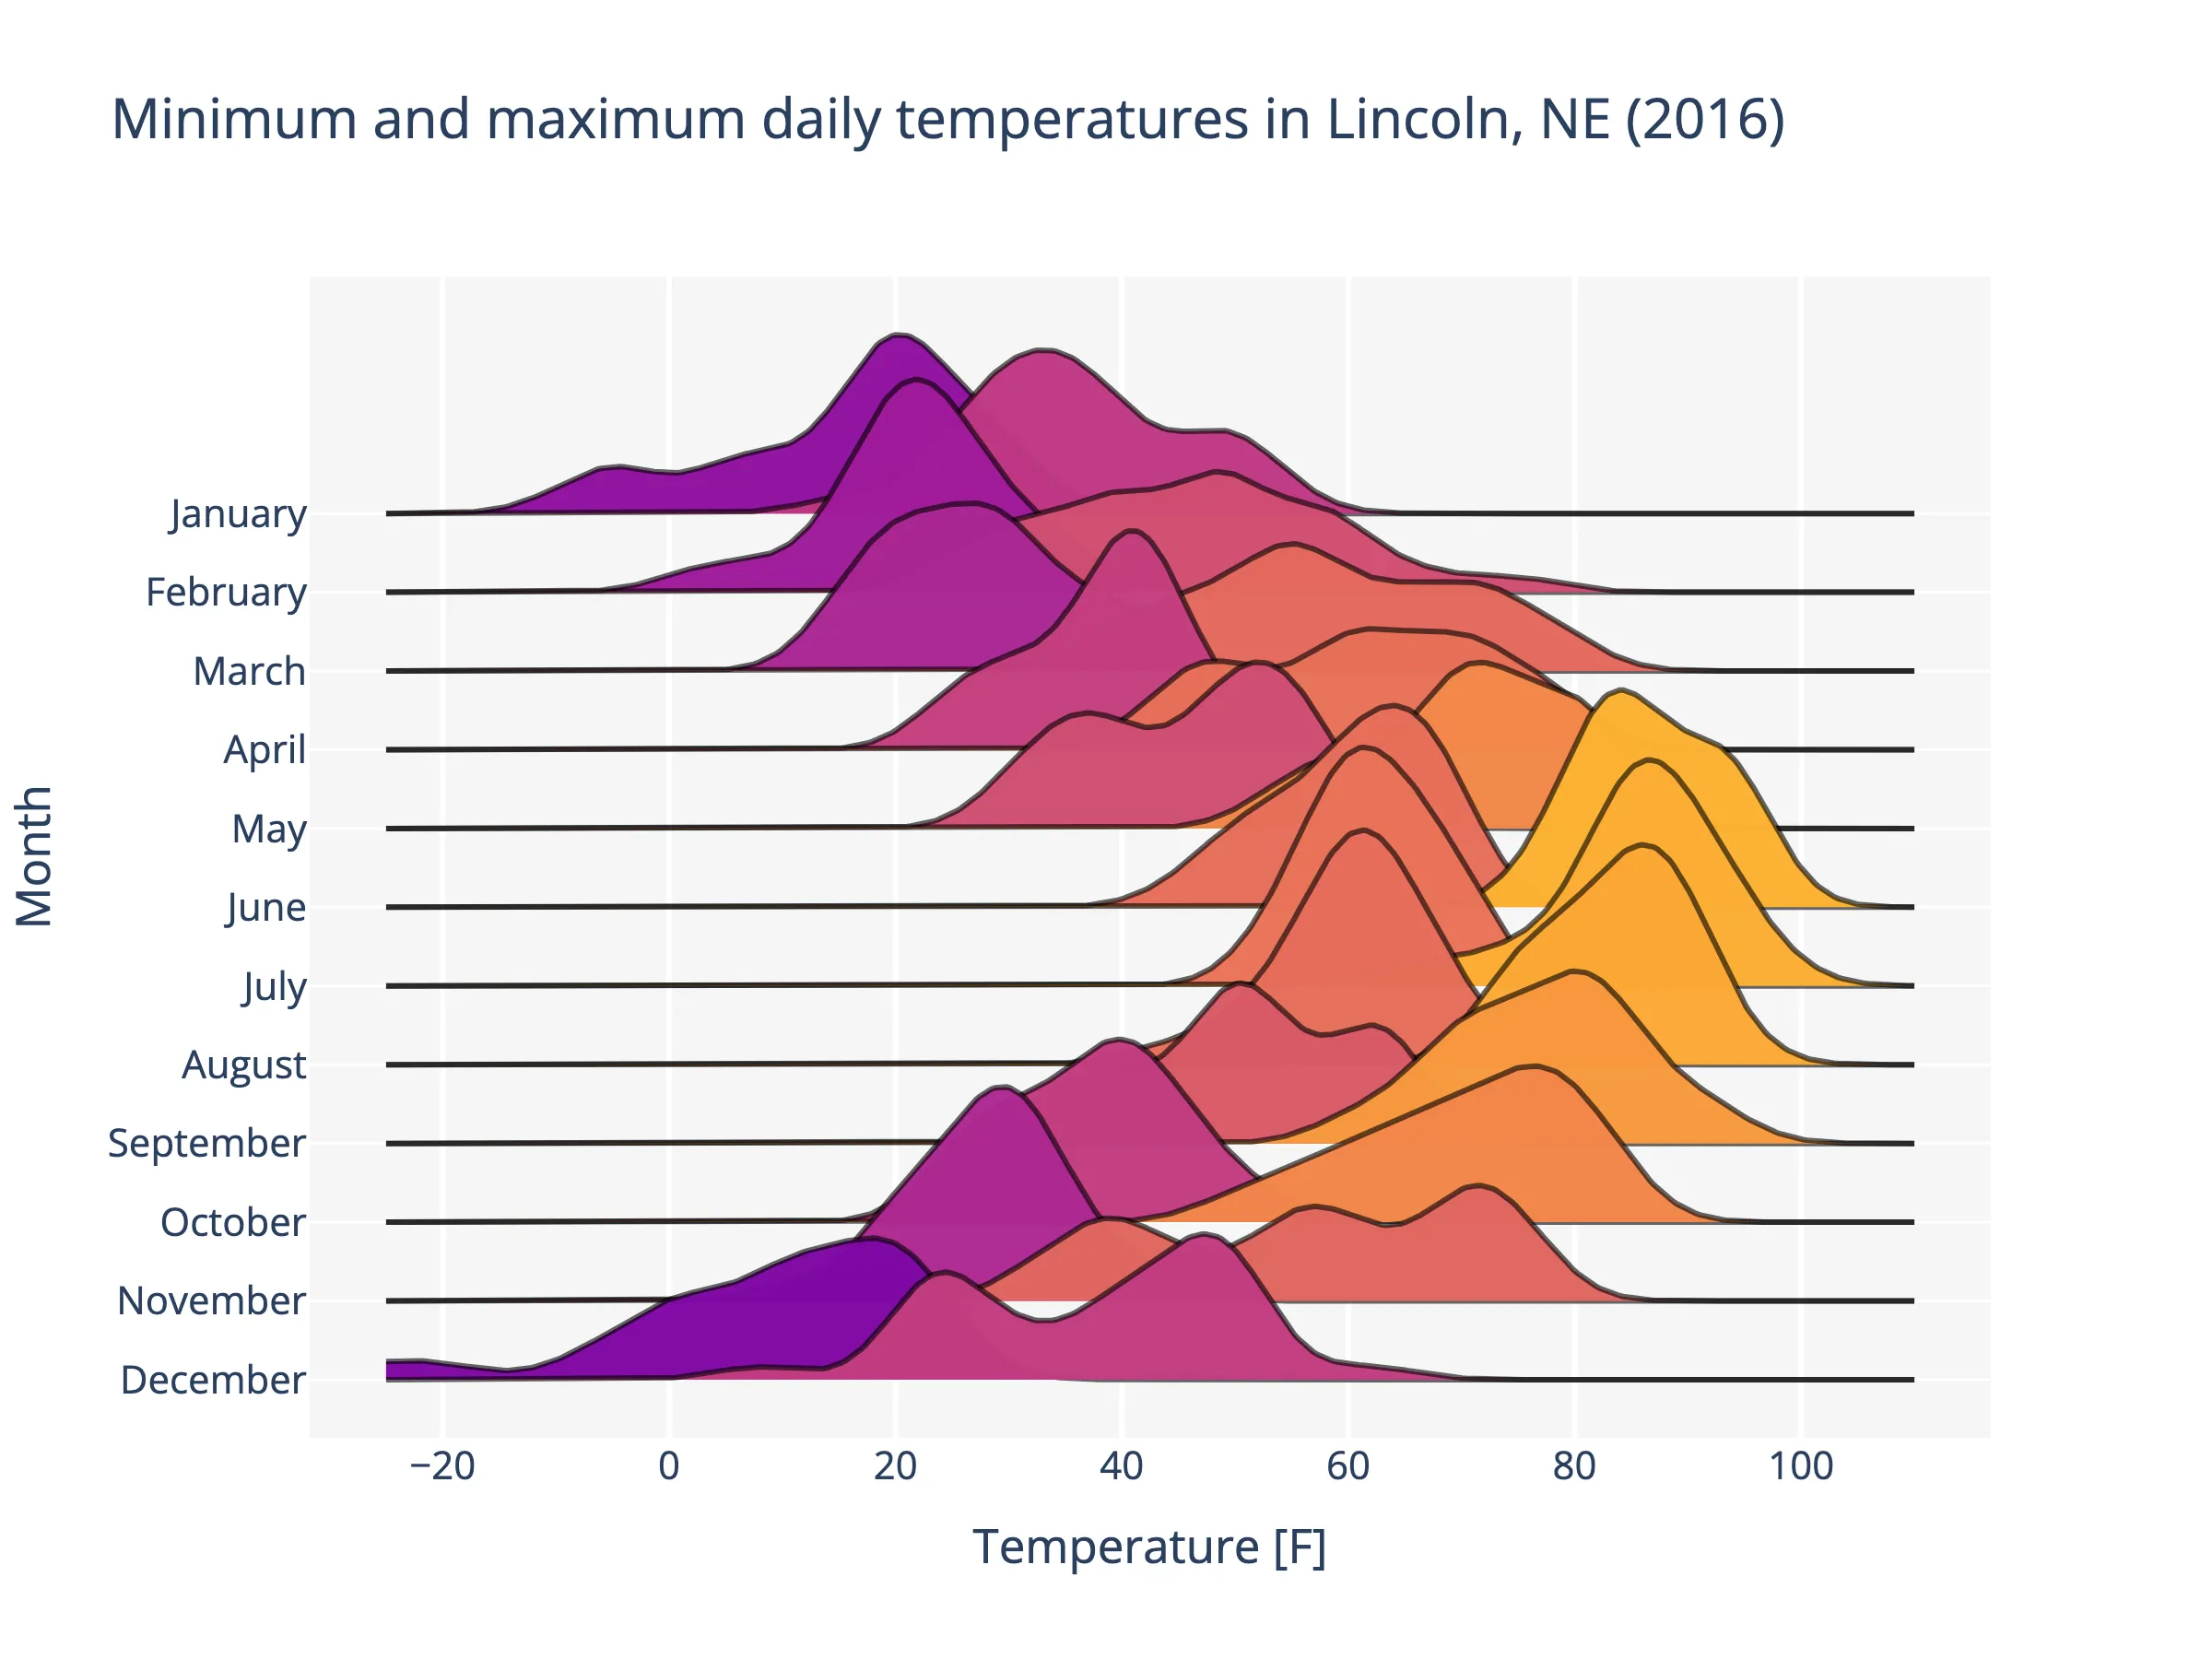 ridgeline plot of the Lincoln Weather dataset using the ridgeplot Python library